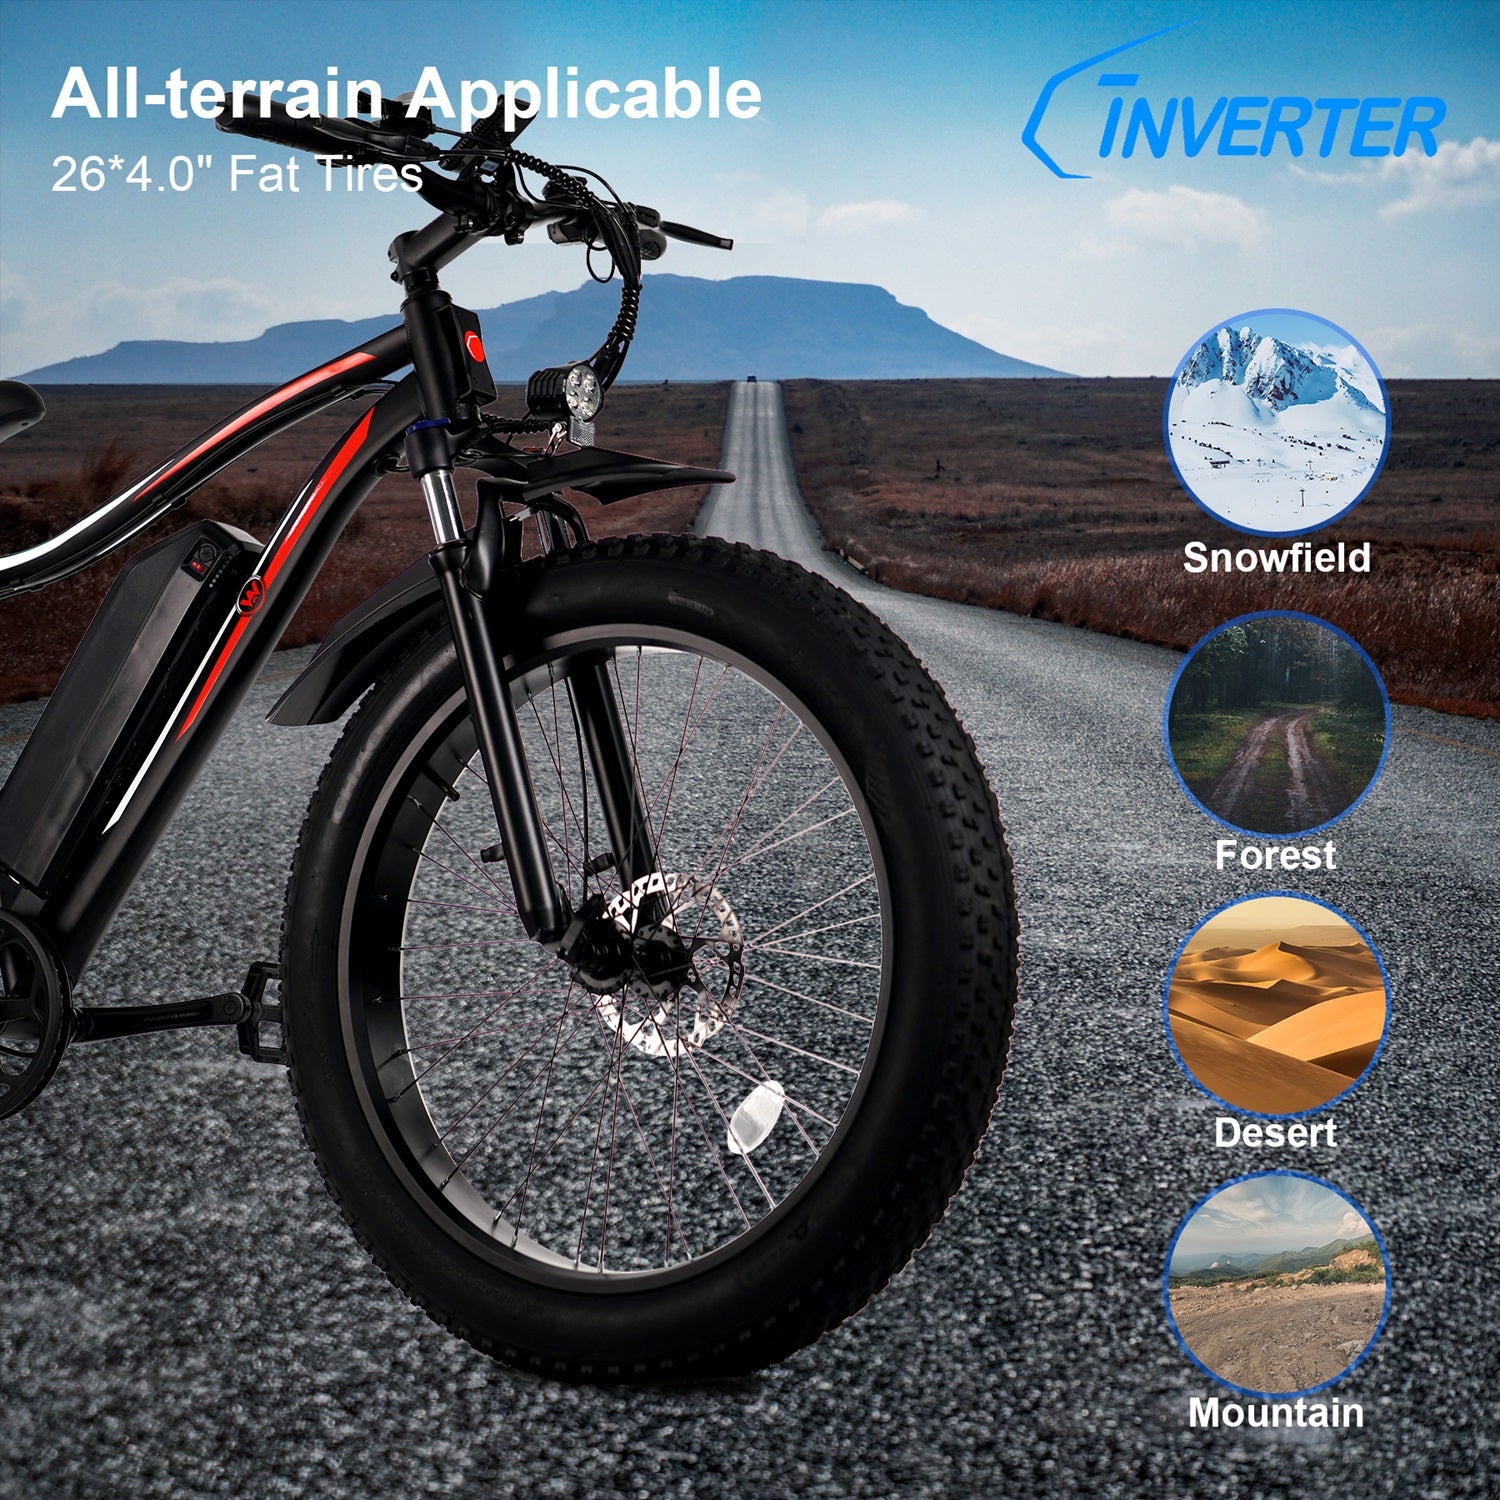 www.cinverter.comPremium TAURUS Long Range All-terrain Fat Tires Snow Electric Bike 26" Cruiser Rovemavable Battery